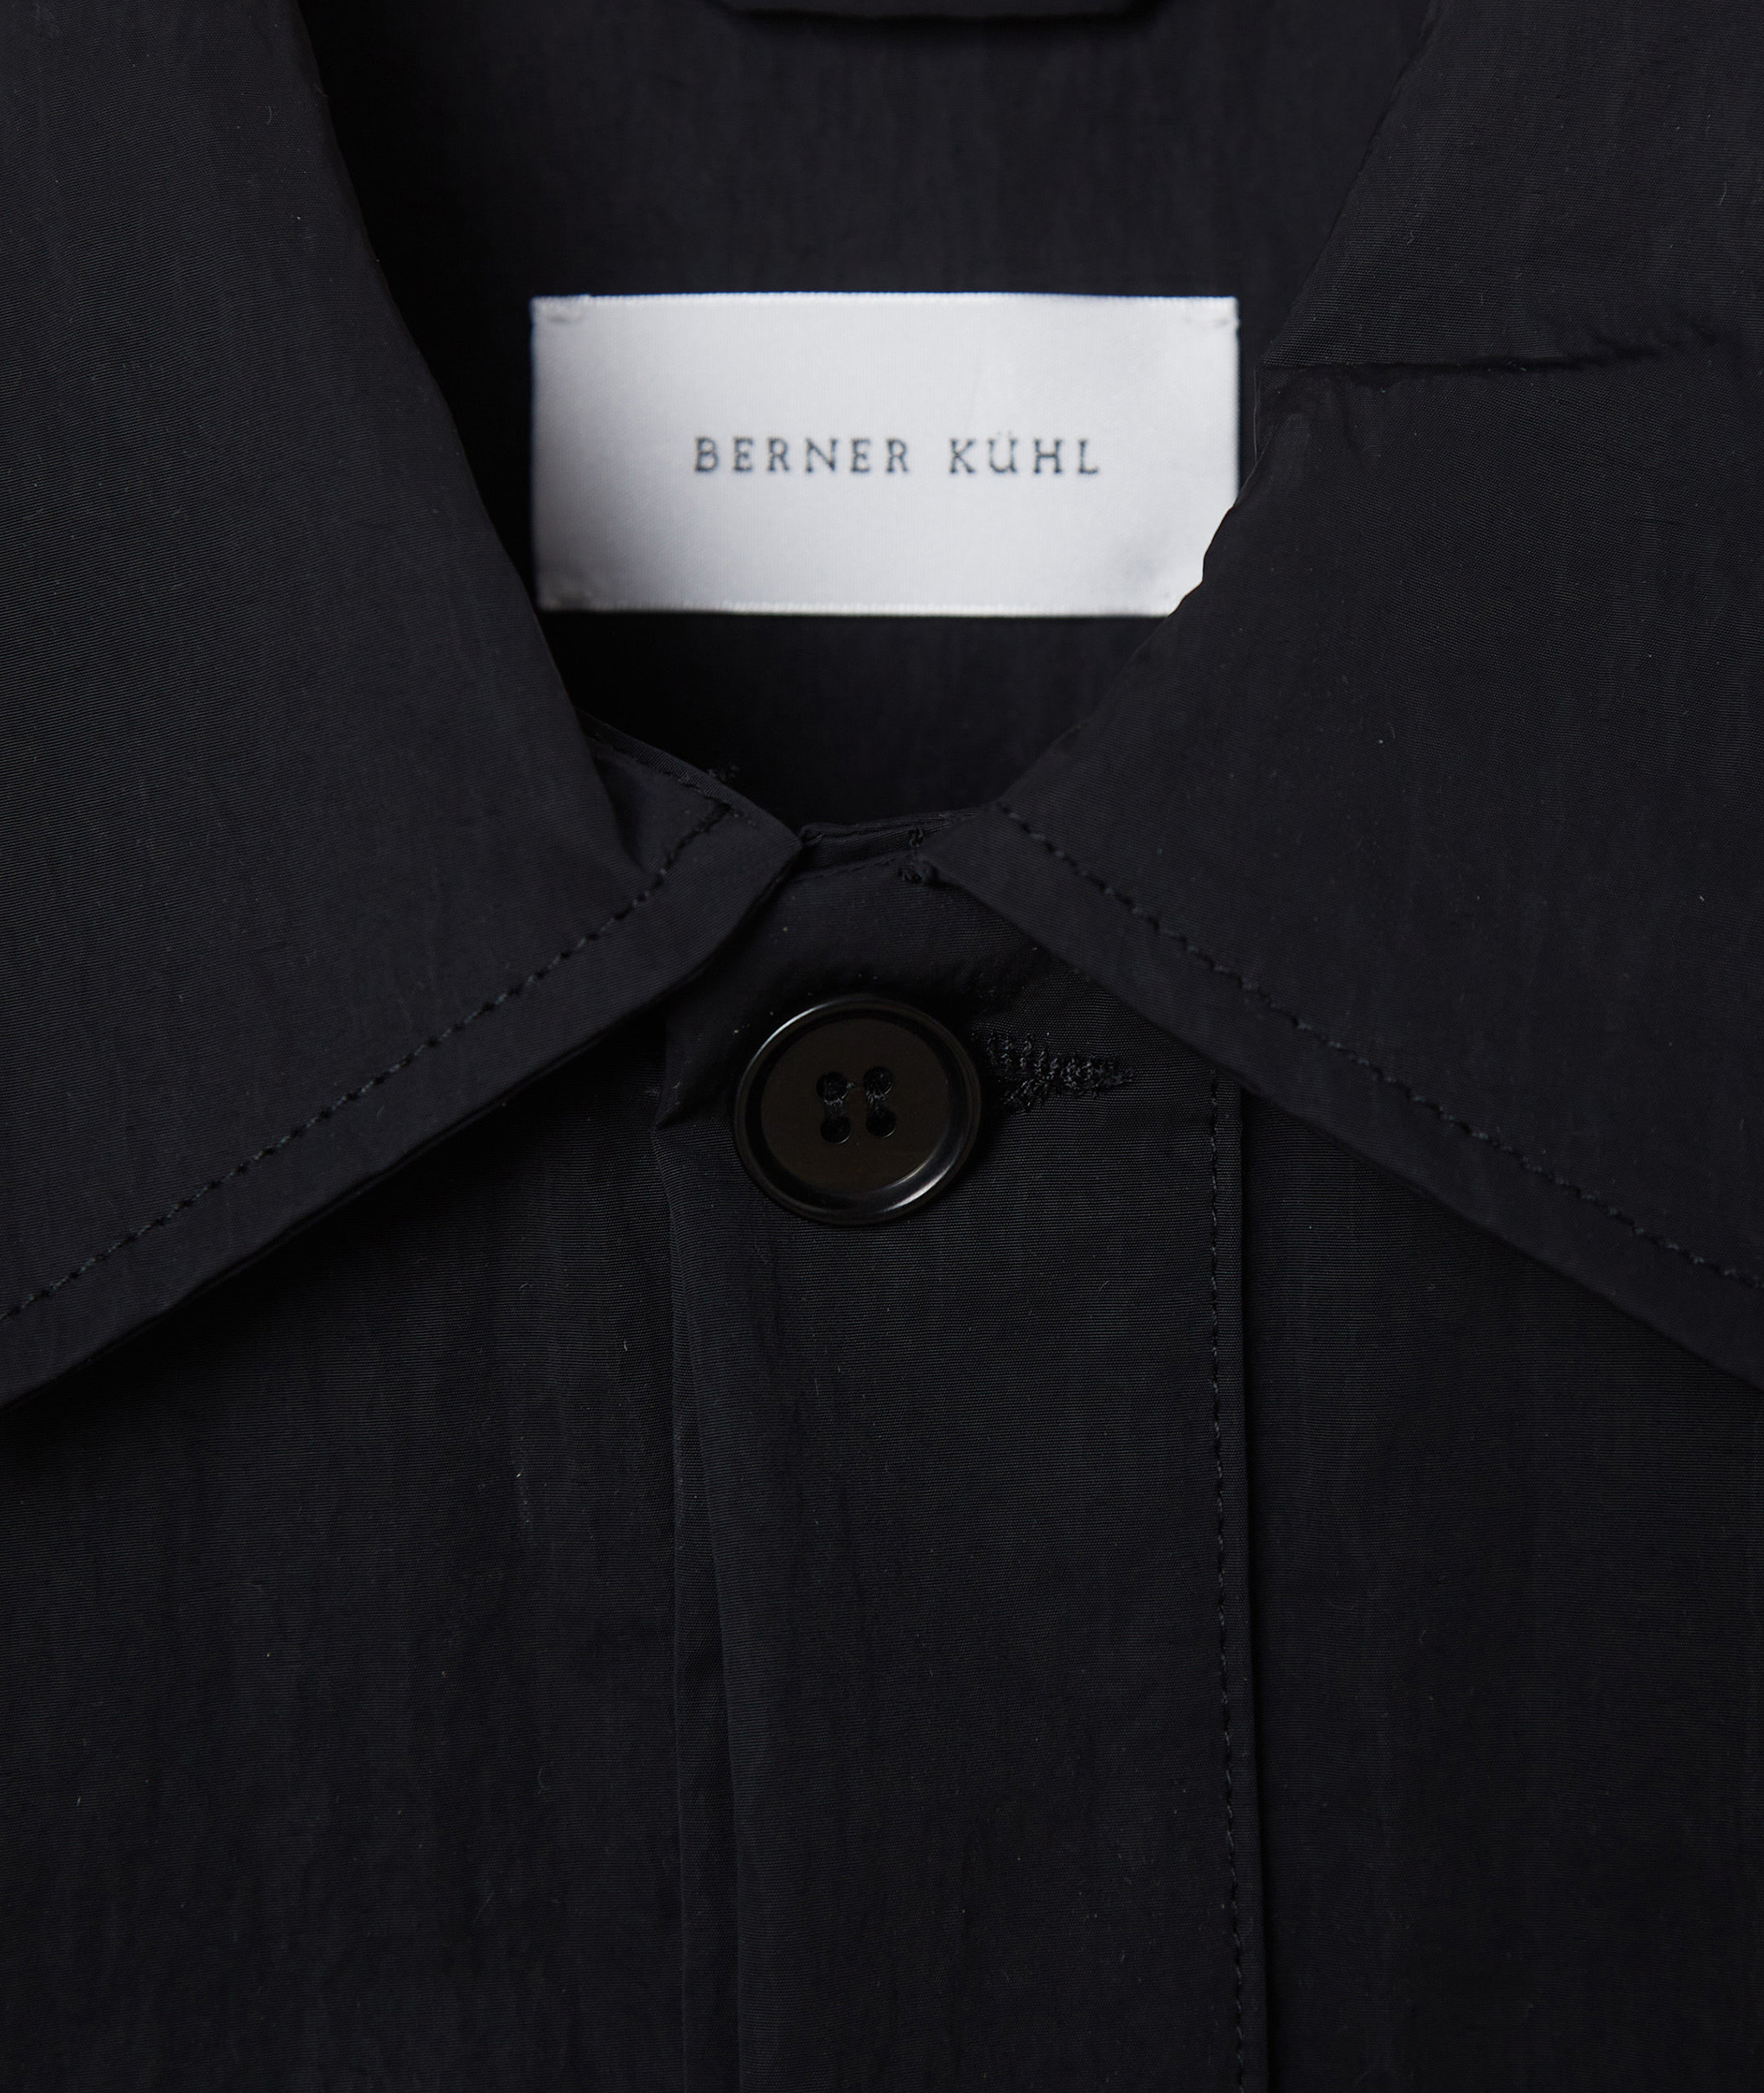 Kühl Black Worldwide - - Shirt Shipping Paint Berner Store | Norse